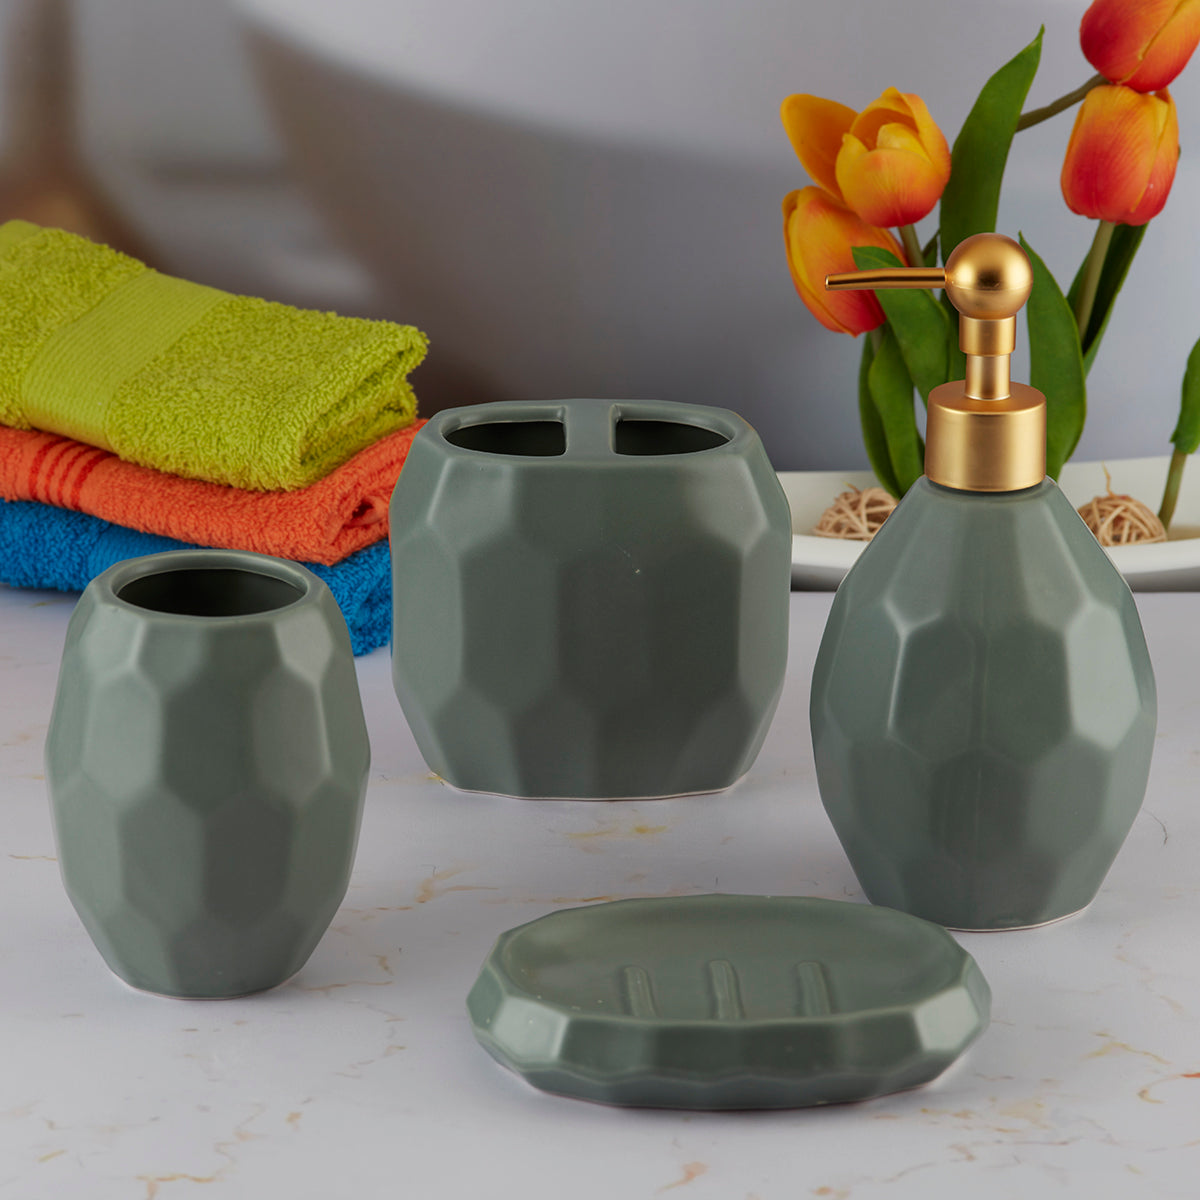 Ceramic Bathroom Accessories Set of 4 Bath Set with Soap Dispenser (5759)